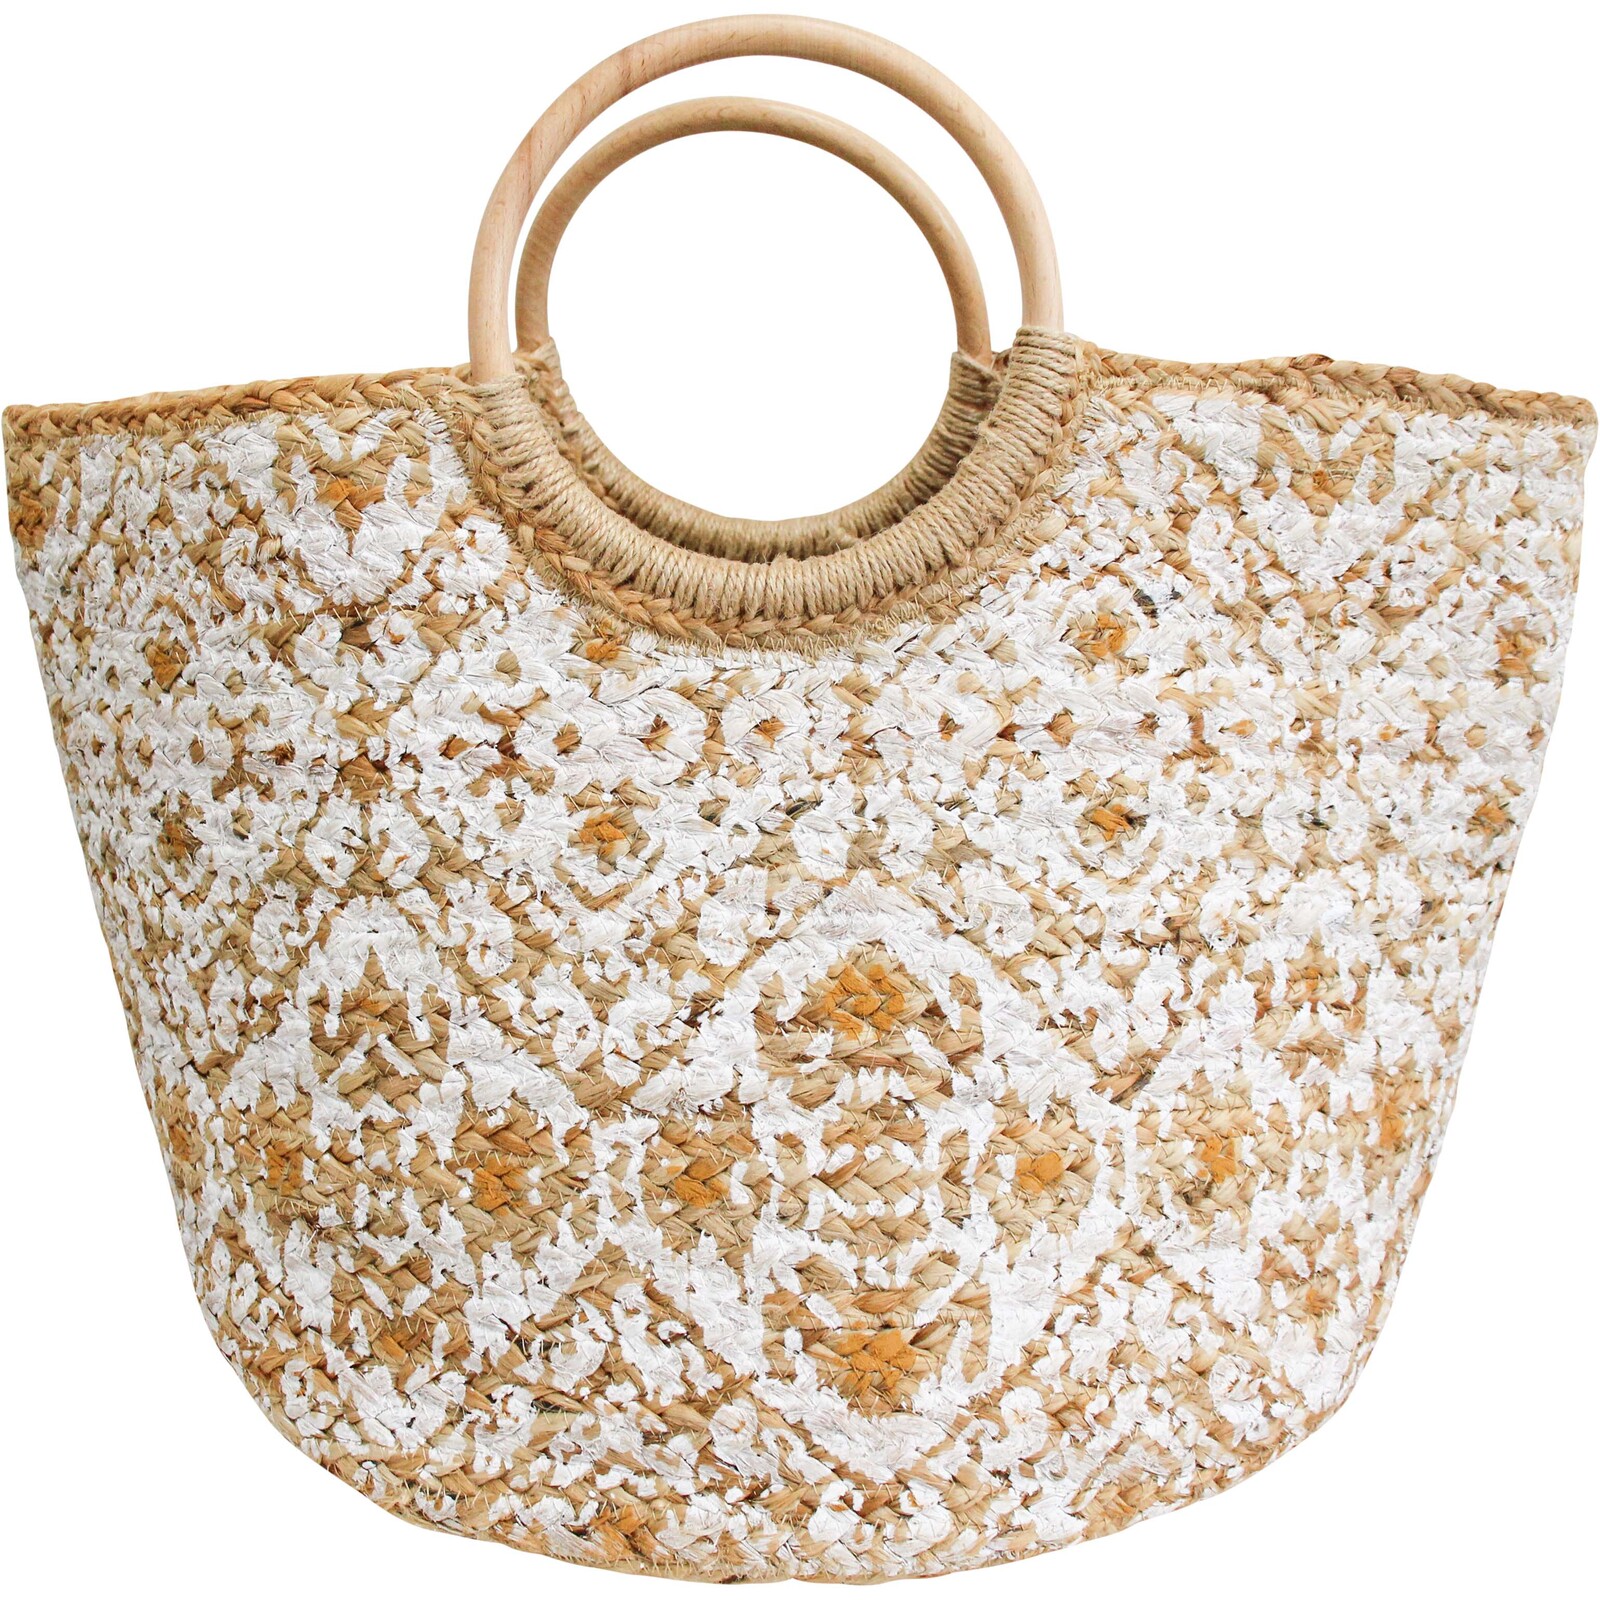 Wholesale Lya Jute Shopper Bag Australia | Buy Fashionista Online ...